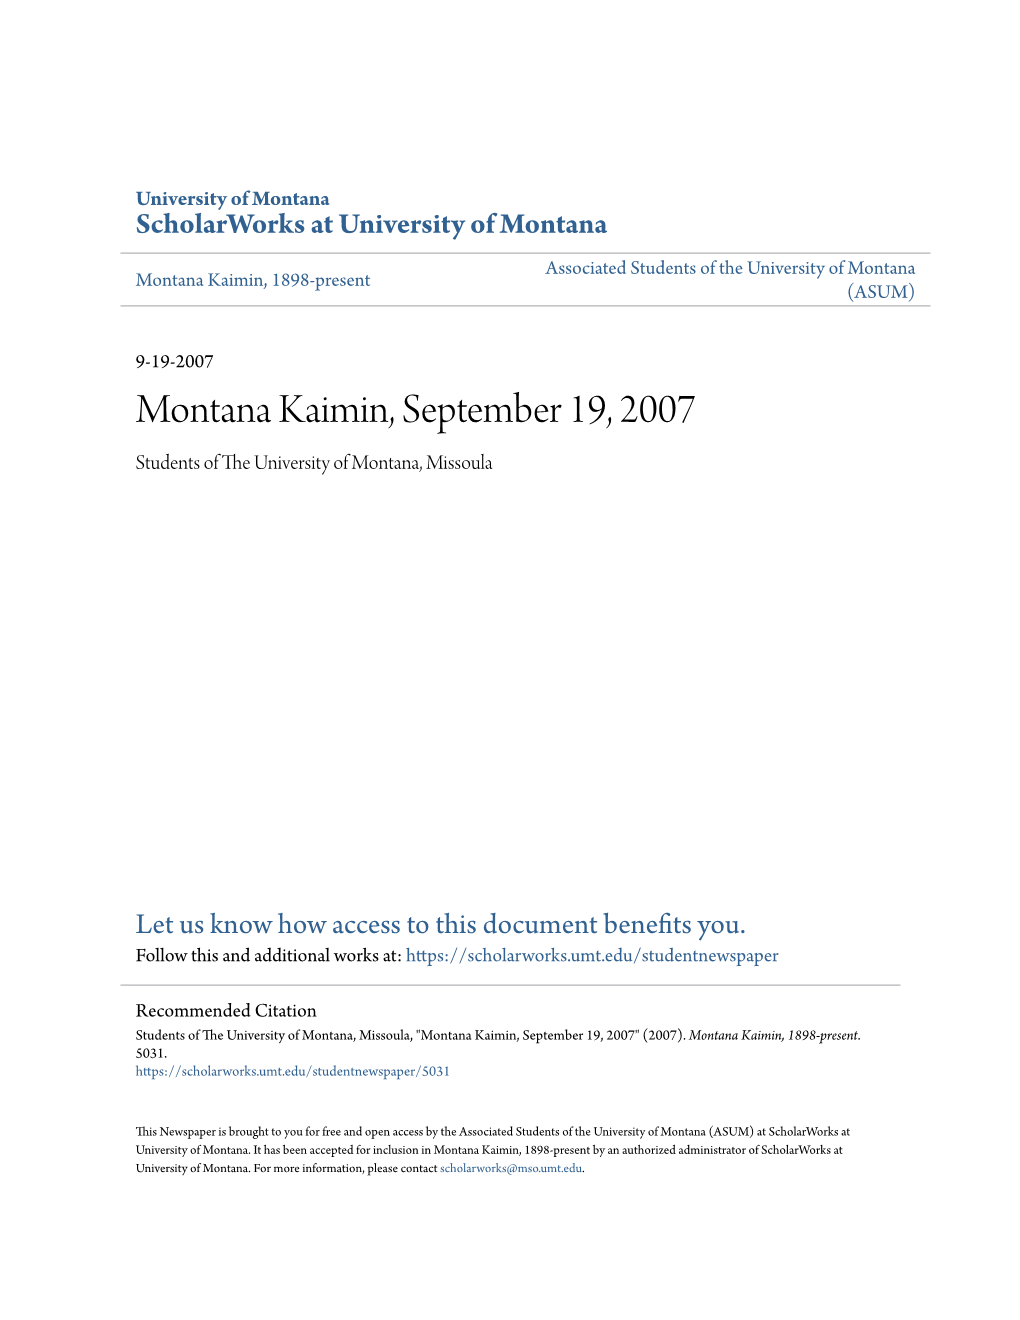 Montana Kaimin, September 19, 2007 Students of the Niu Versity of Montana, Missoula